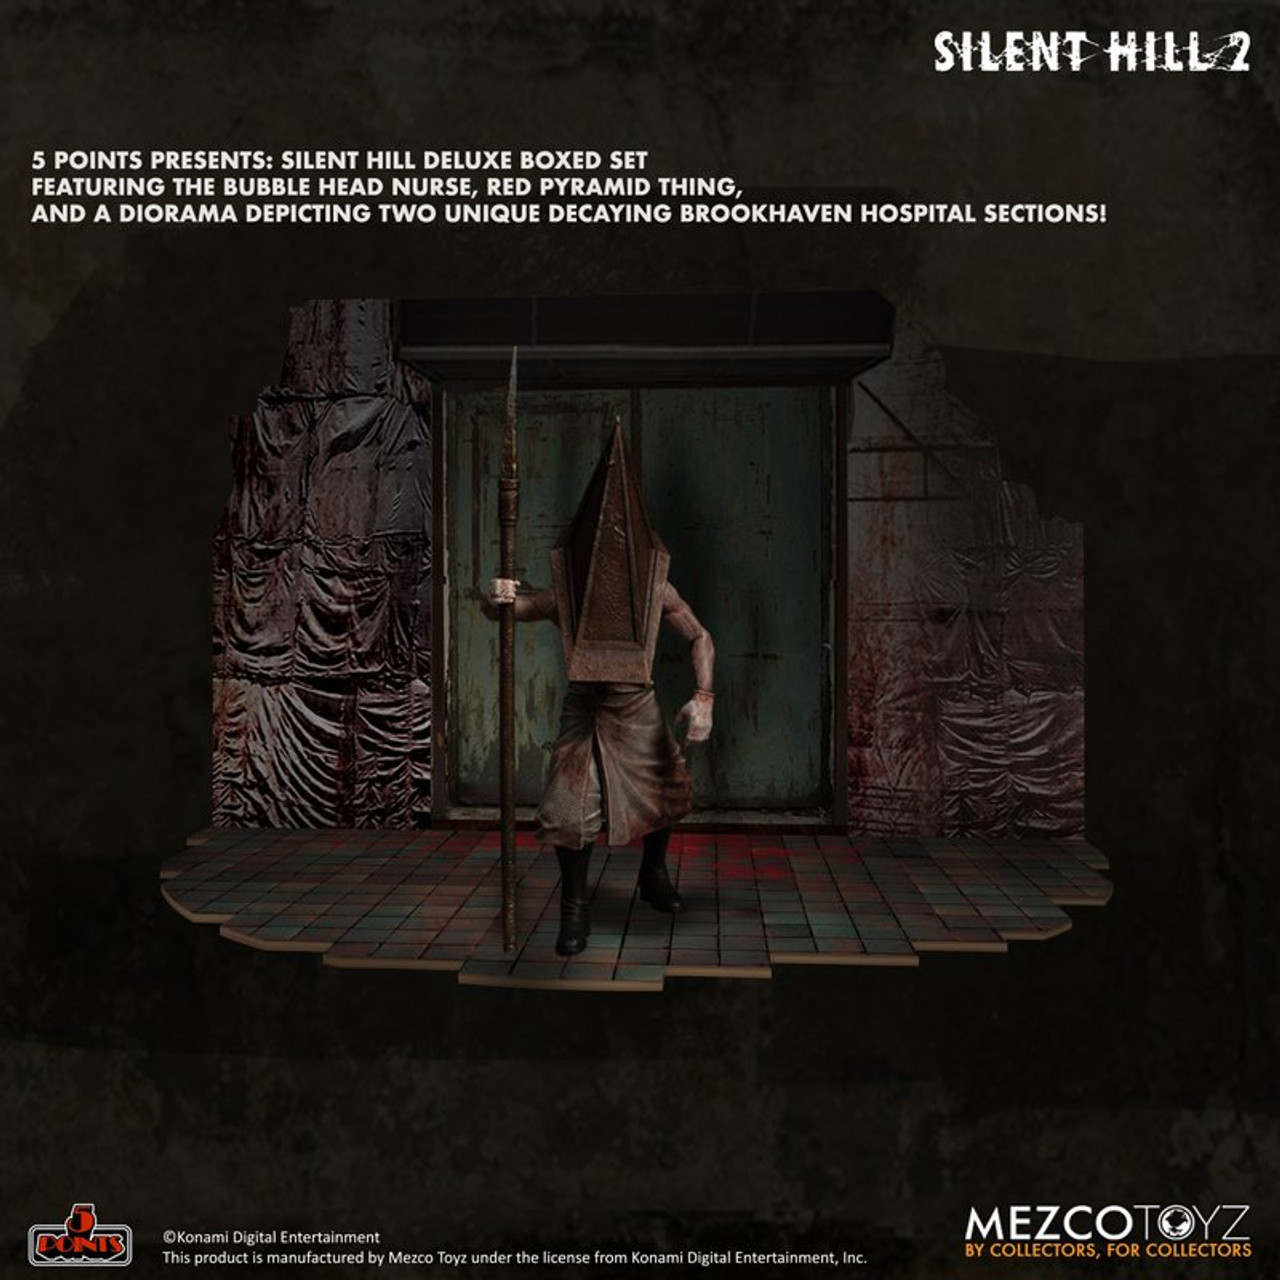 Mezco Silent Hill 2 Pyramid Head 1/12 Collectible Action Figure Pre-sale